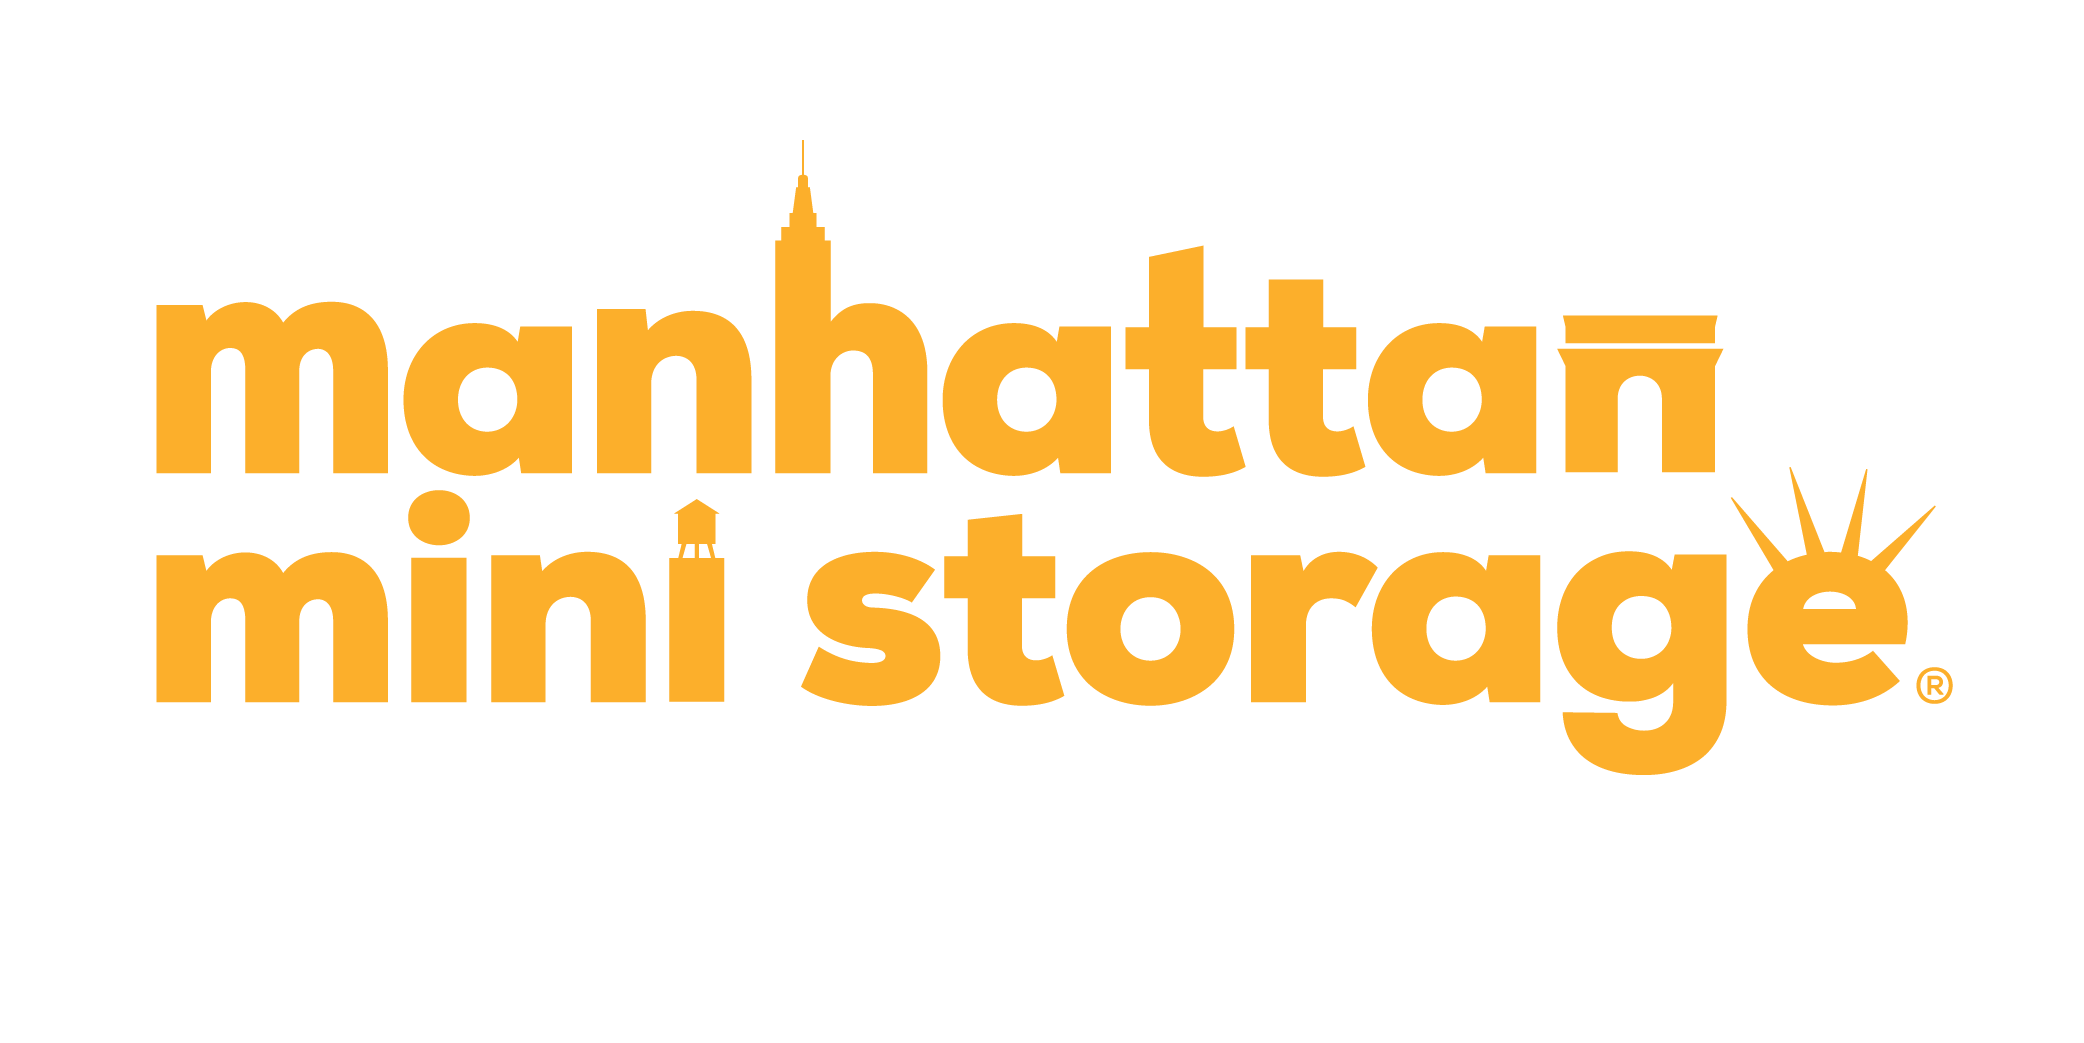 Manhattan Mini Storage for Students